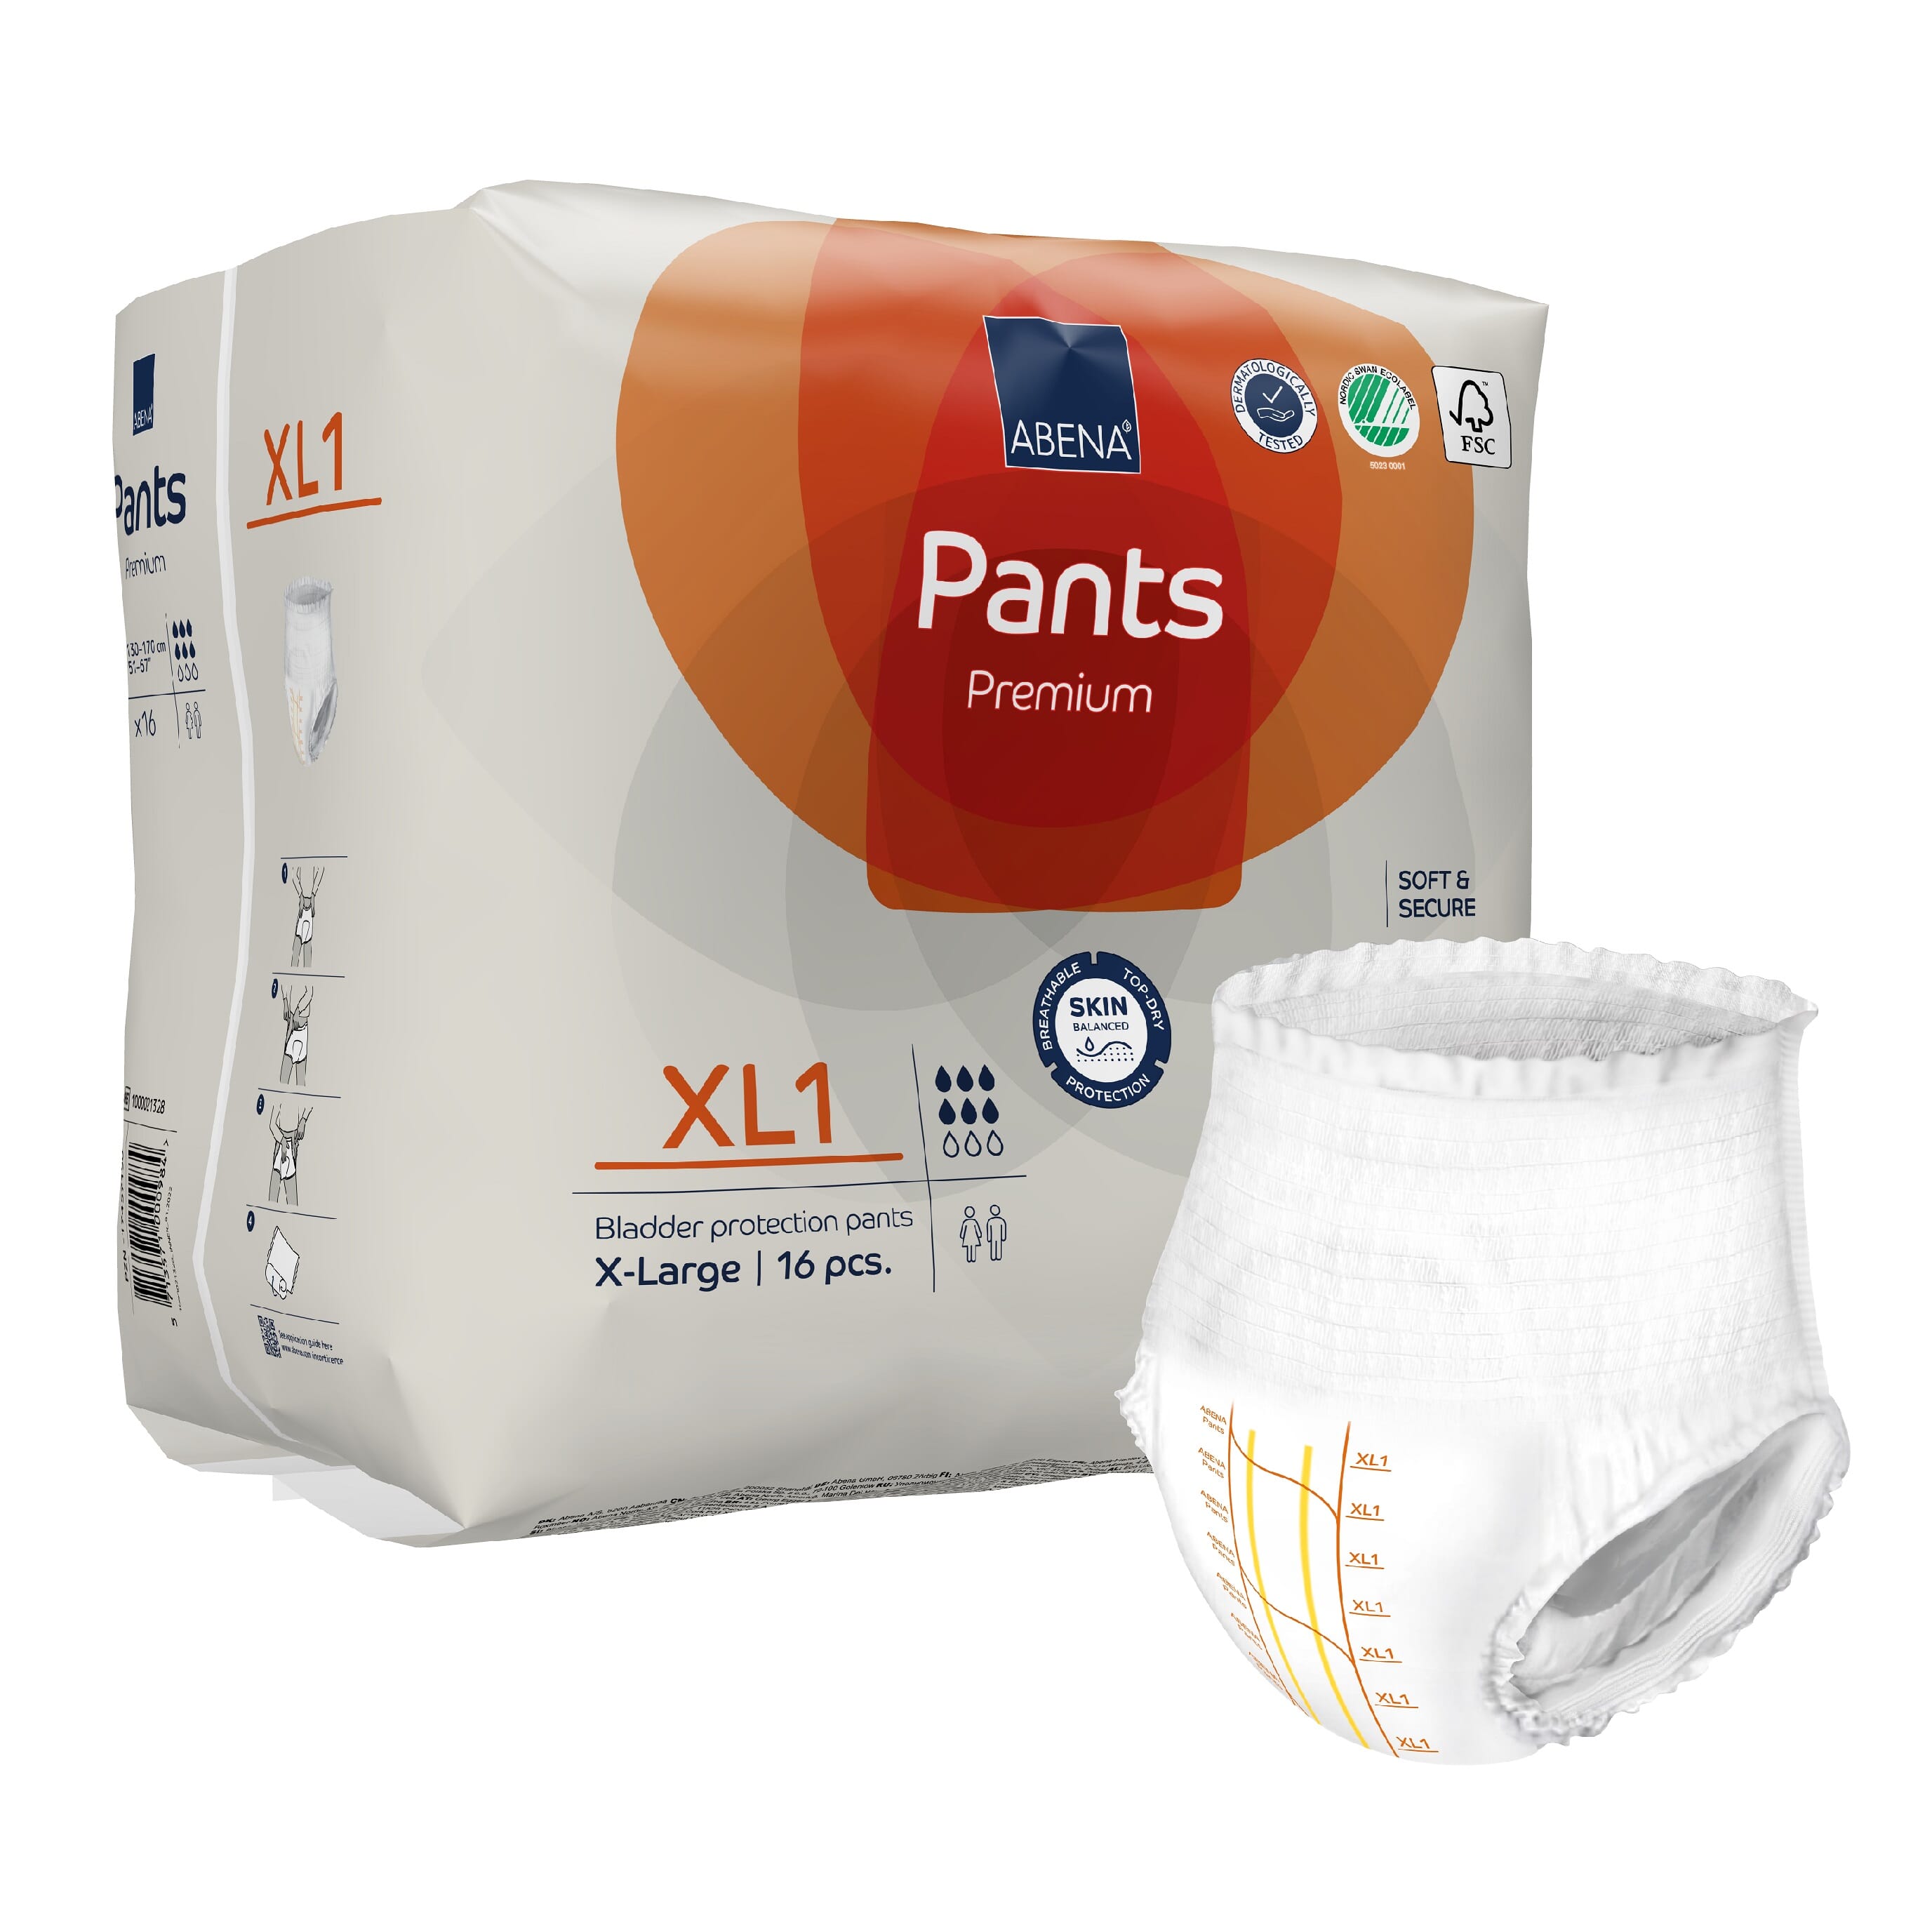 Image of Abena Pants Premium Incontinence Pants - XL1